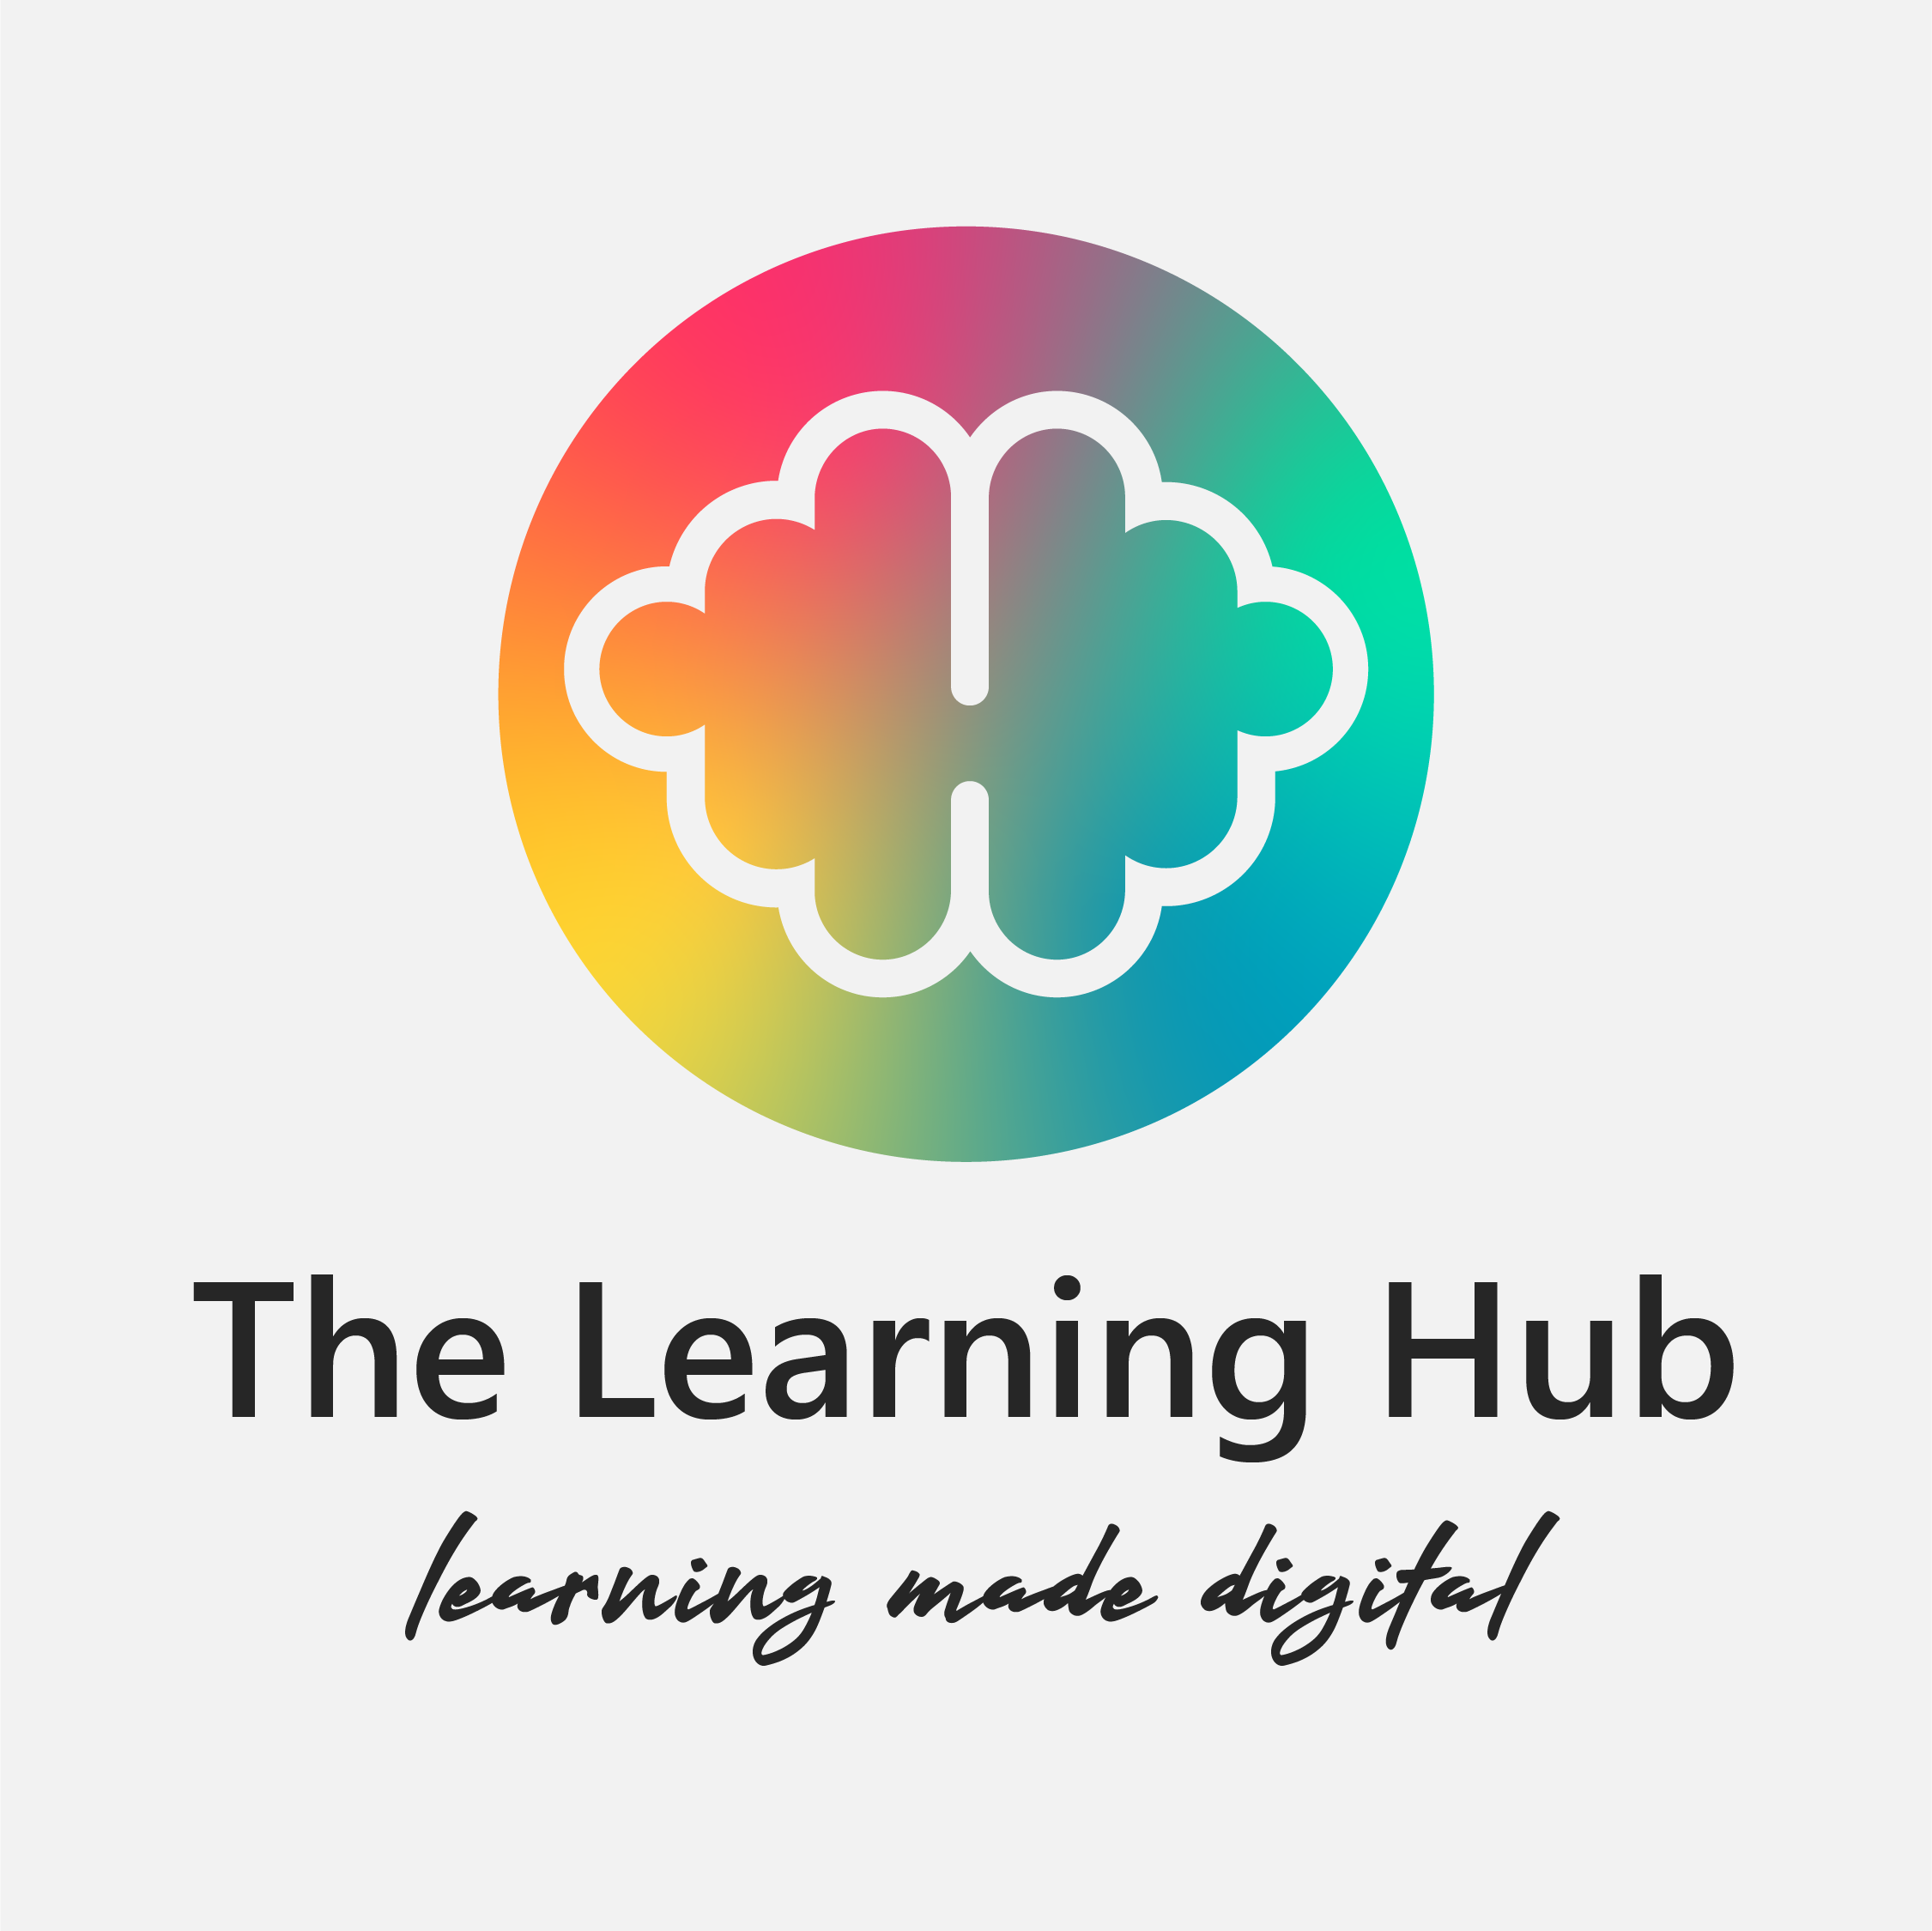 Blog post | Meet The Learning Hub 2.0